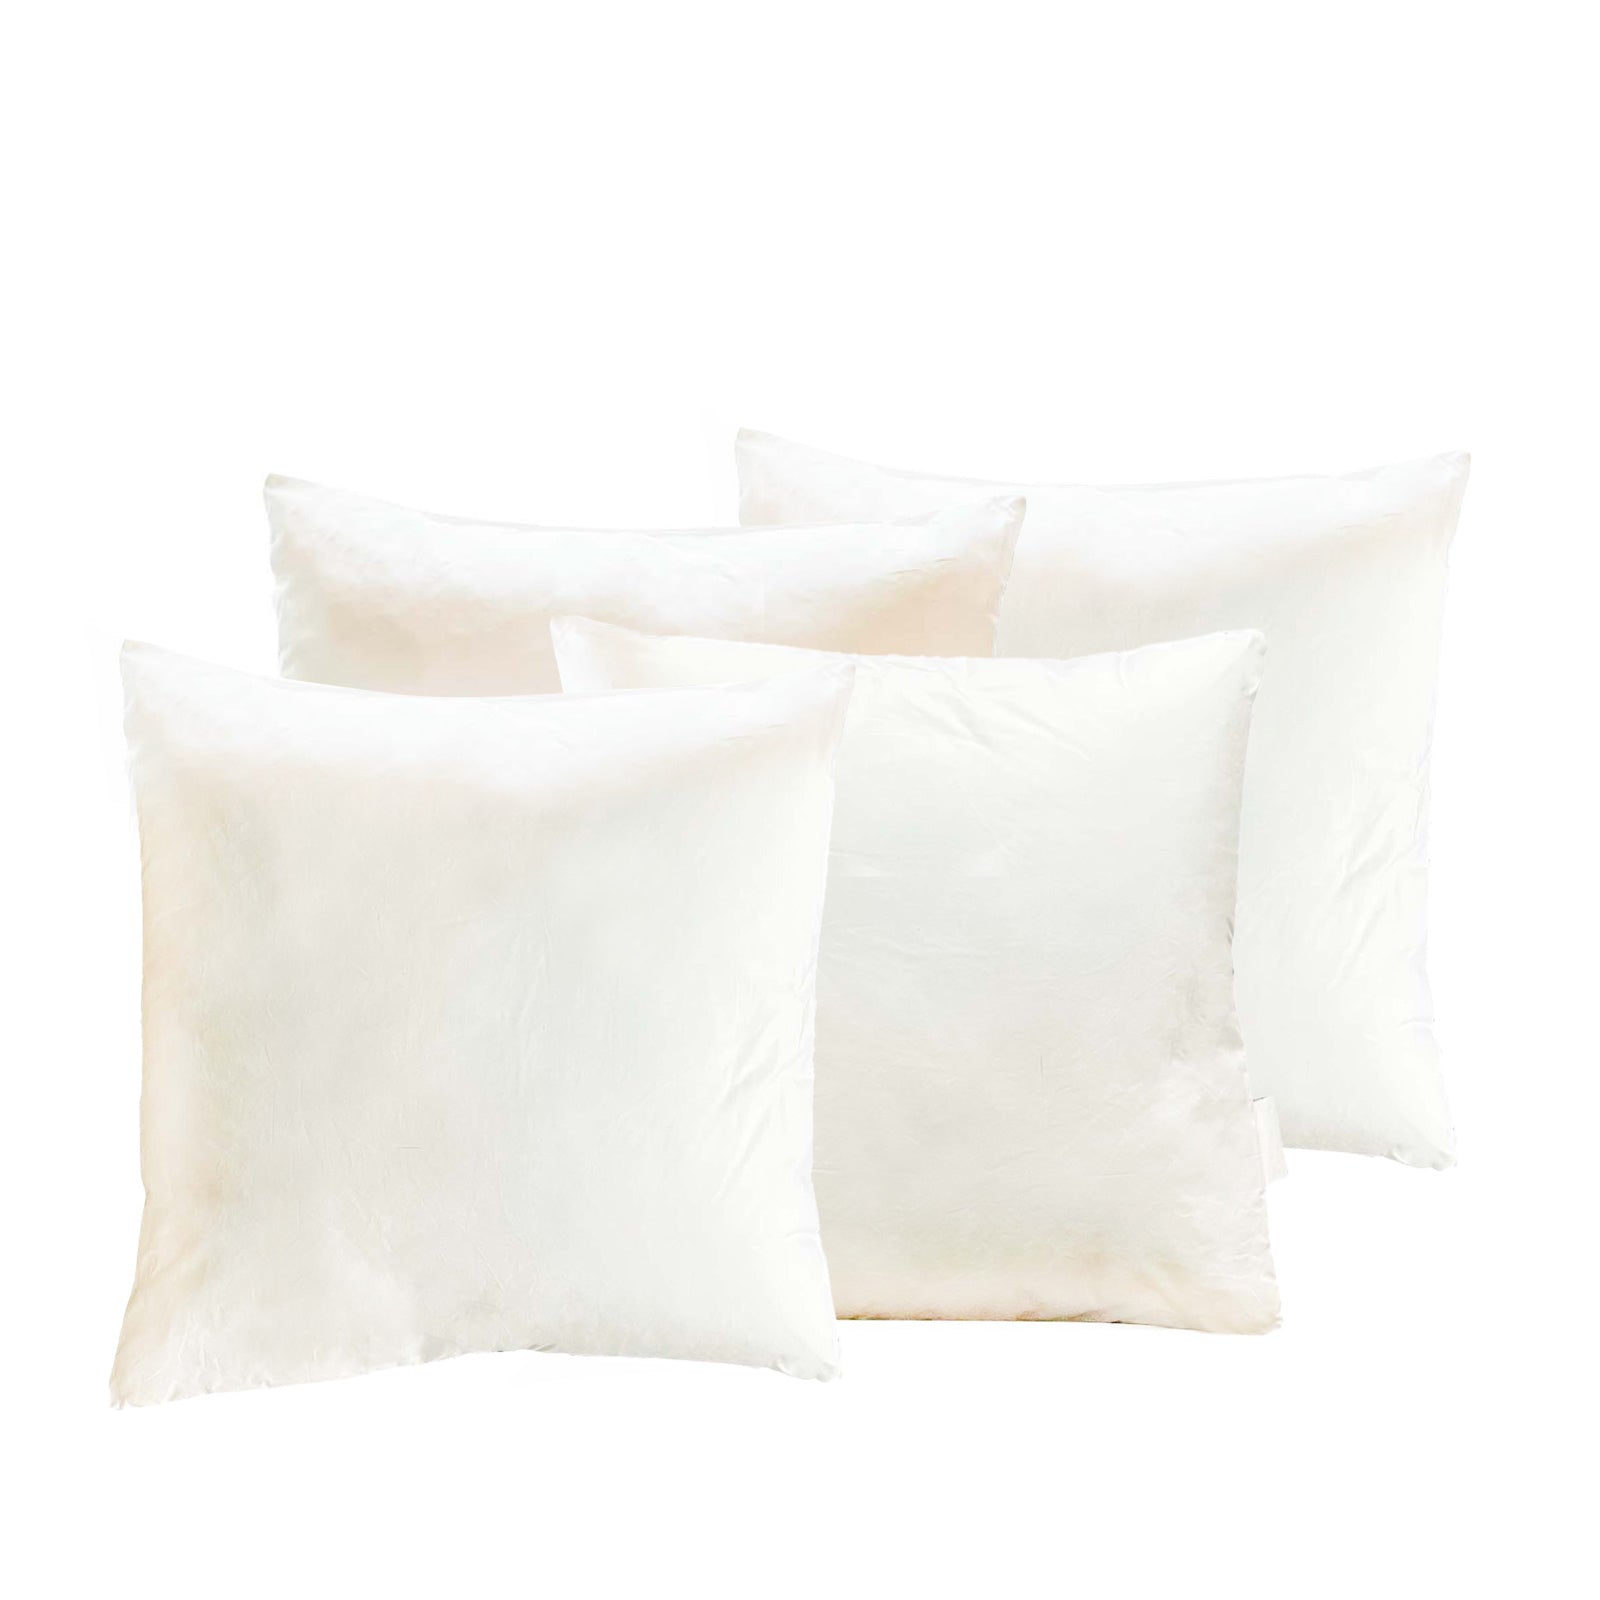 Square Pillow Insert in Down Alternative Microfiber